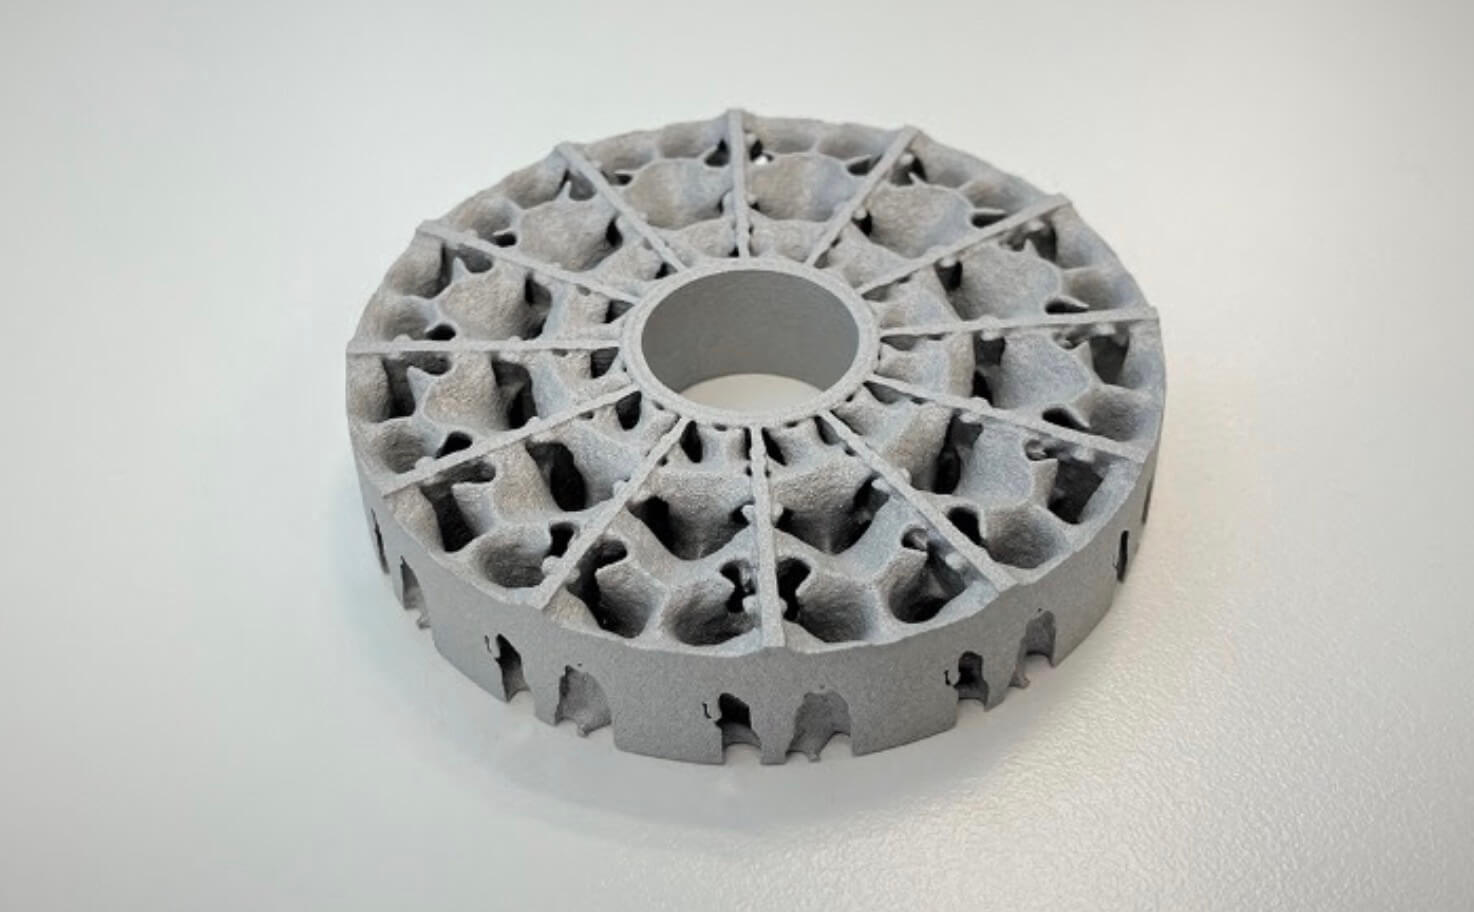 CNC Engraving Aluminum Parts with 3D Printed Fixtures